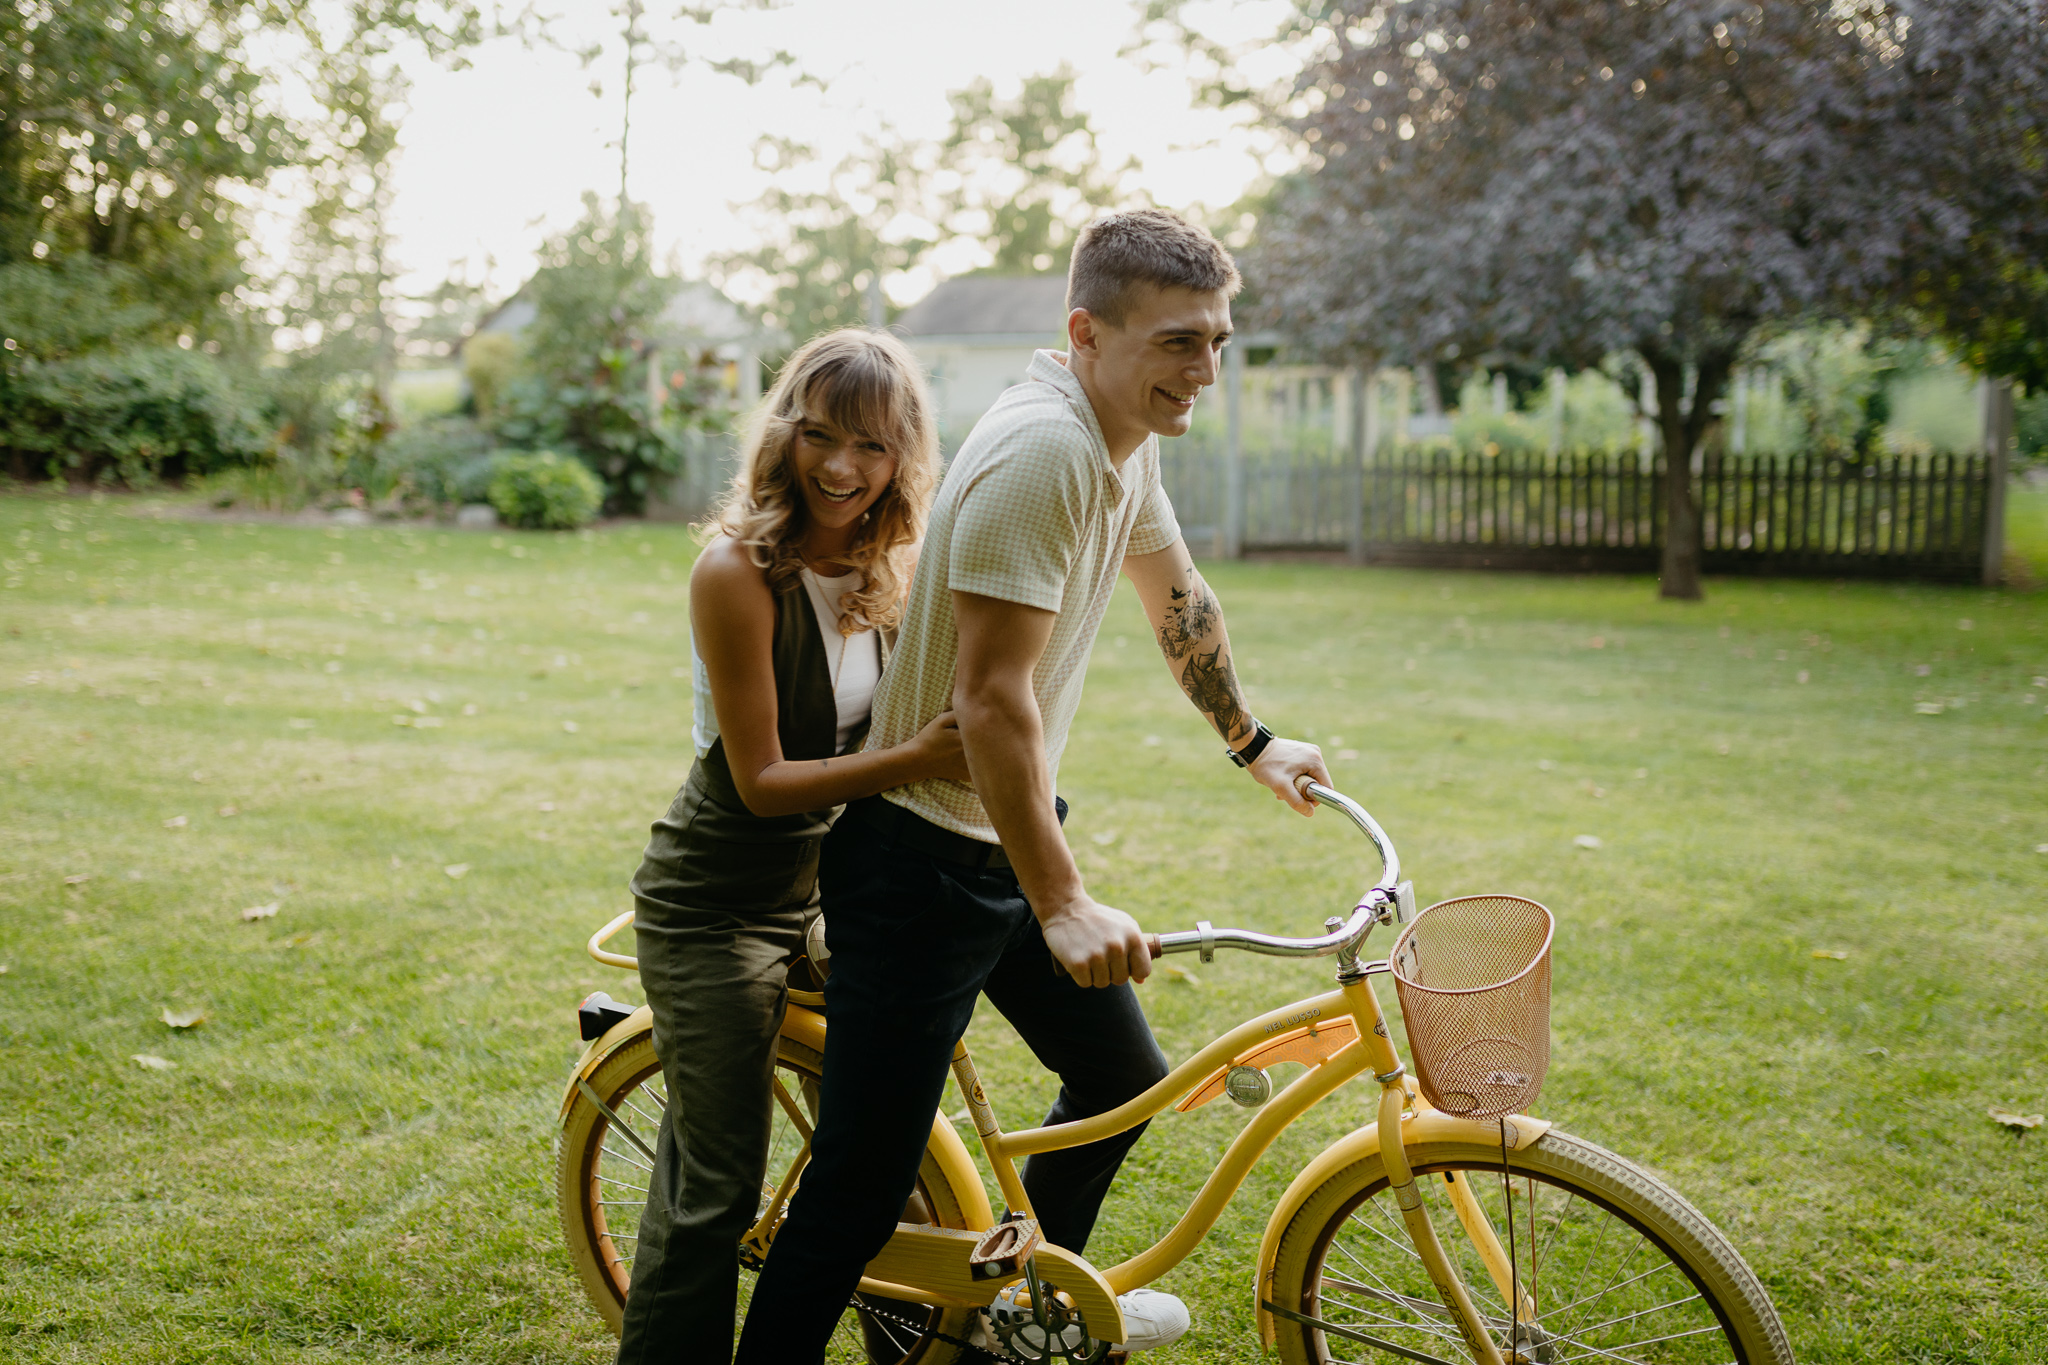 Defries Gardens Indiana couple photos || riding a bike together